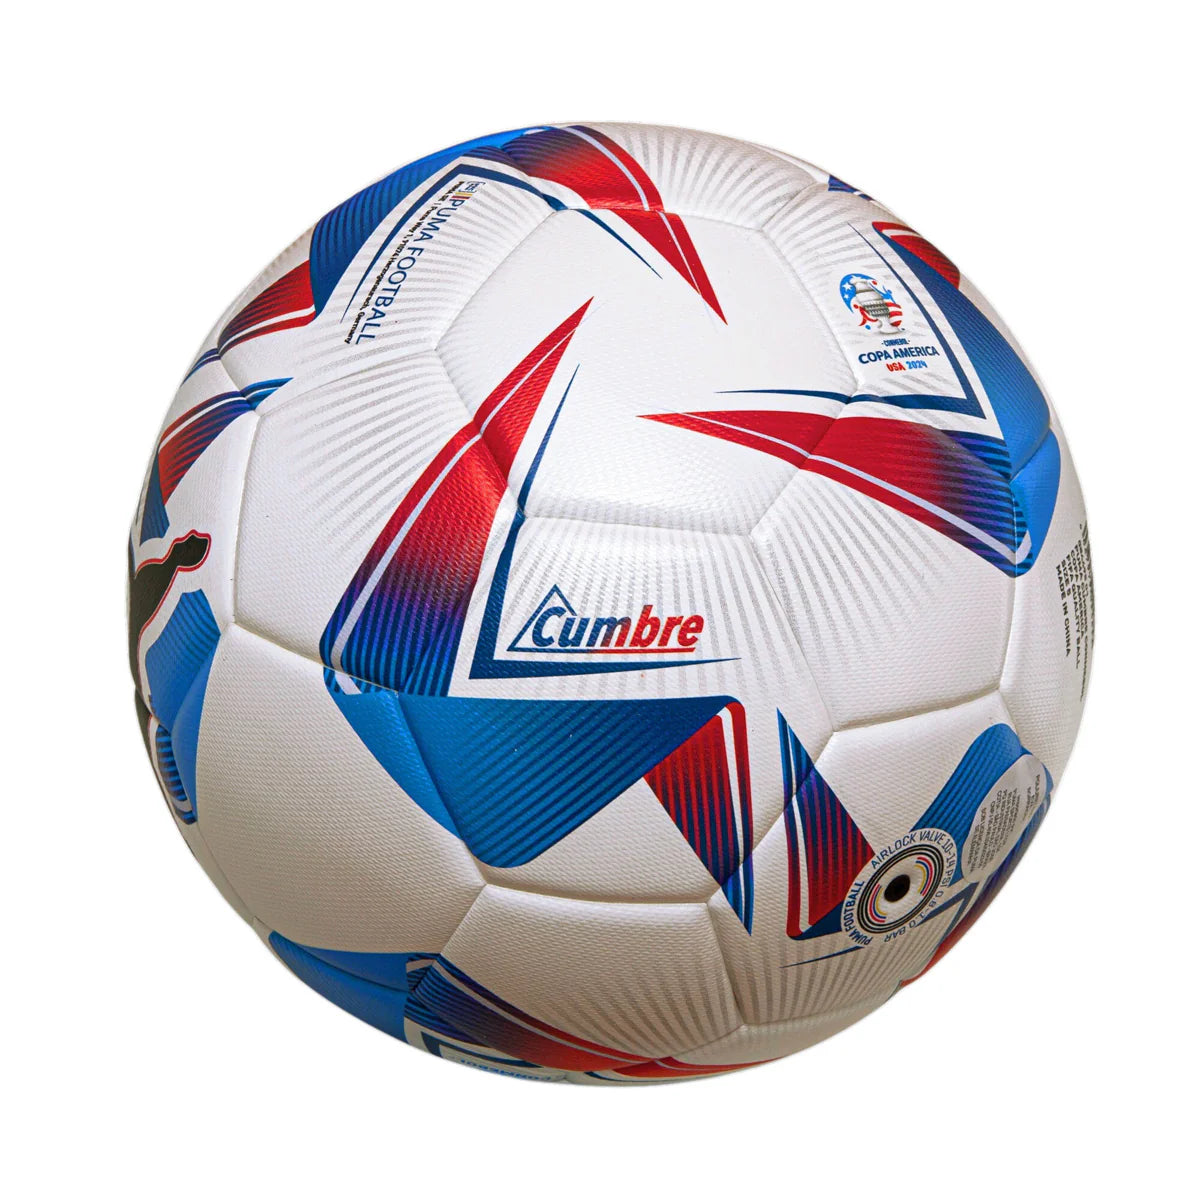 PUMA Cumbre CONMEBOL Copa América (FIFA Quality) Soccer Ball